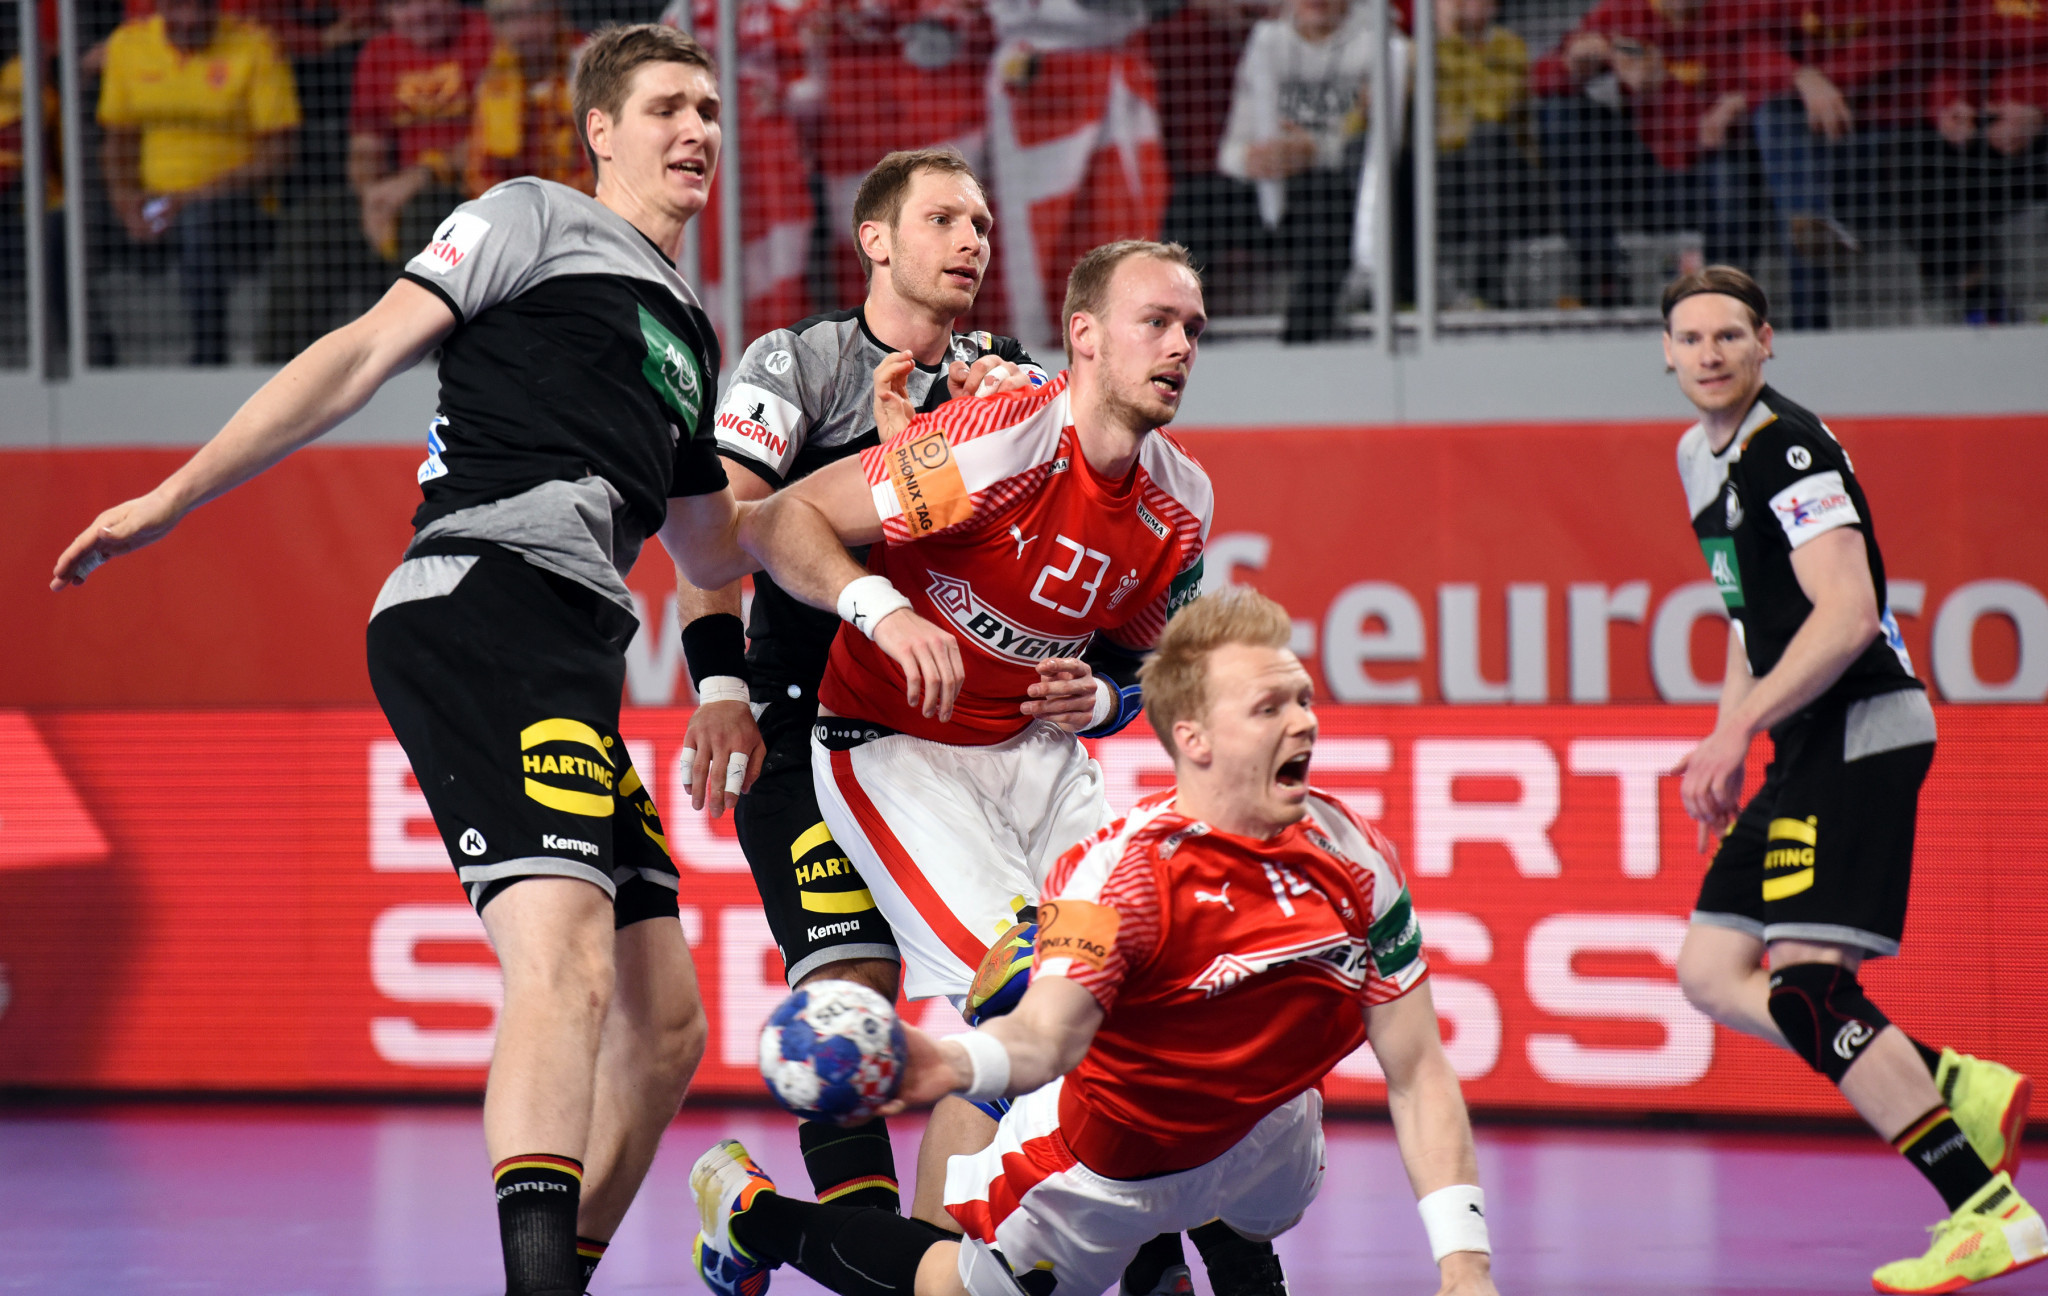 Holders Germany lose key match at European Men’s Handball Championship